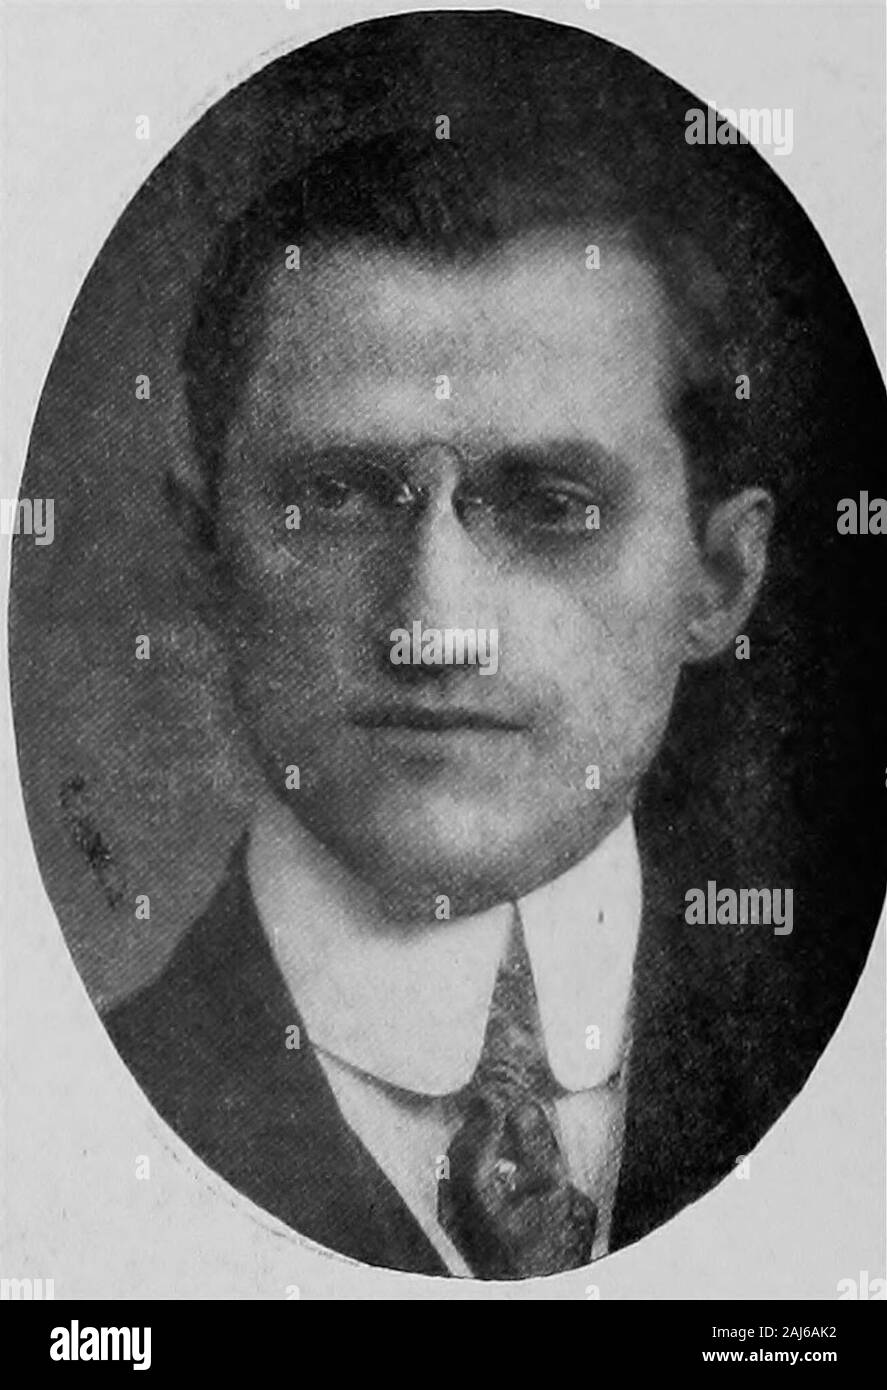 Empire State notables, 1914 . DR. H. ROTH DentistNew York Cily HENRY RLUM, D. S. Imperio de la ciudad de Nueva York. Estado Notaples DENlAl. suncucoNs 389; Foto de stock